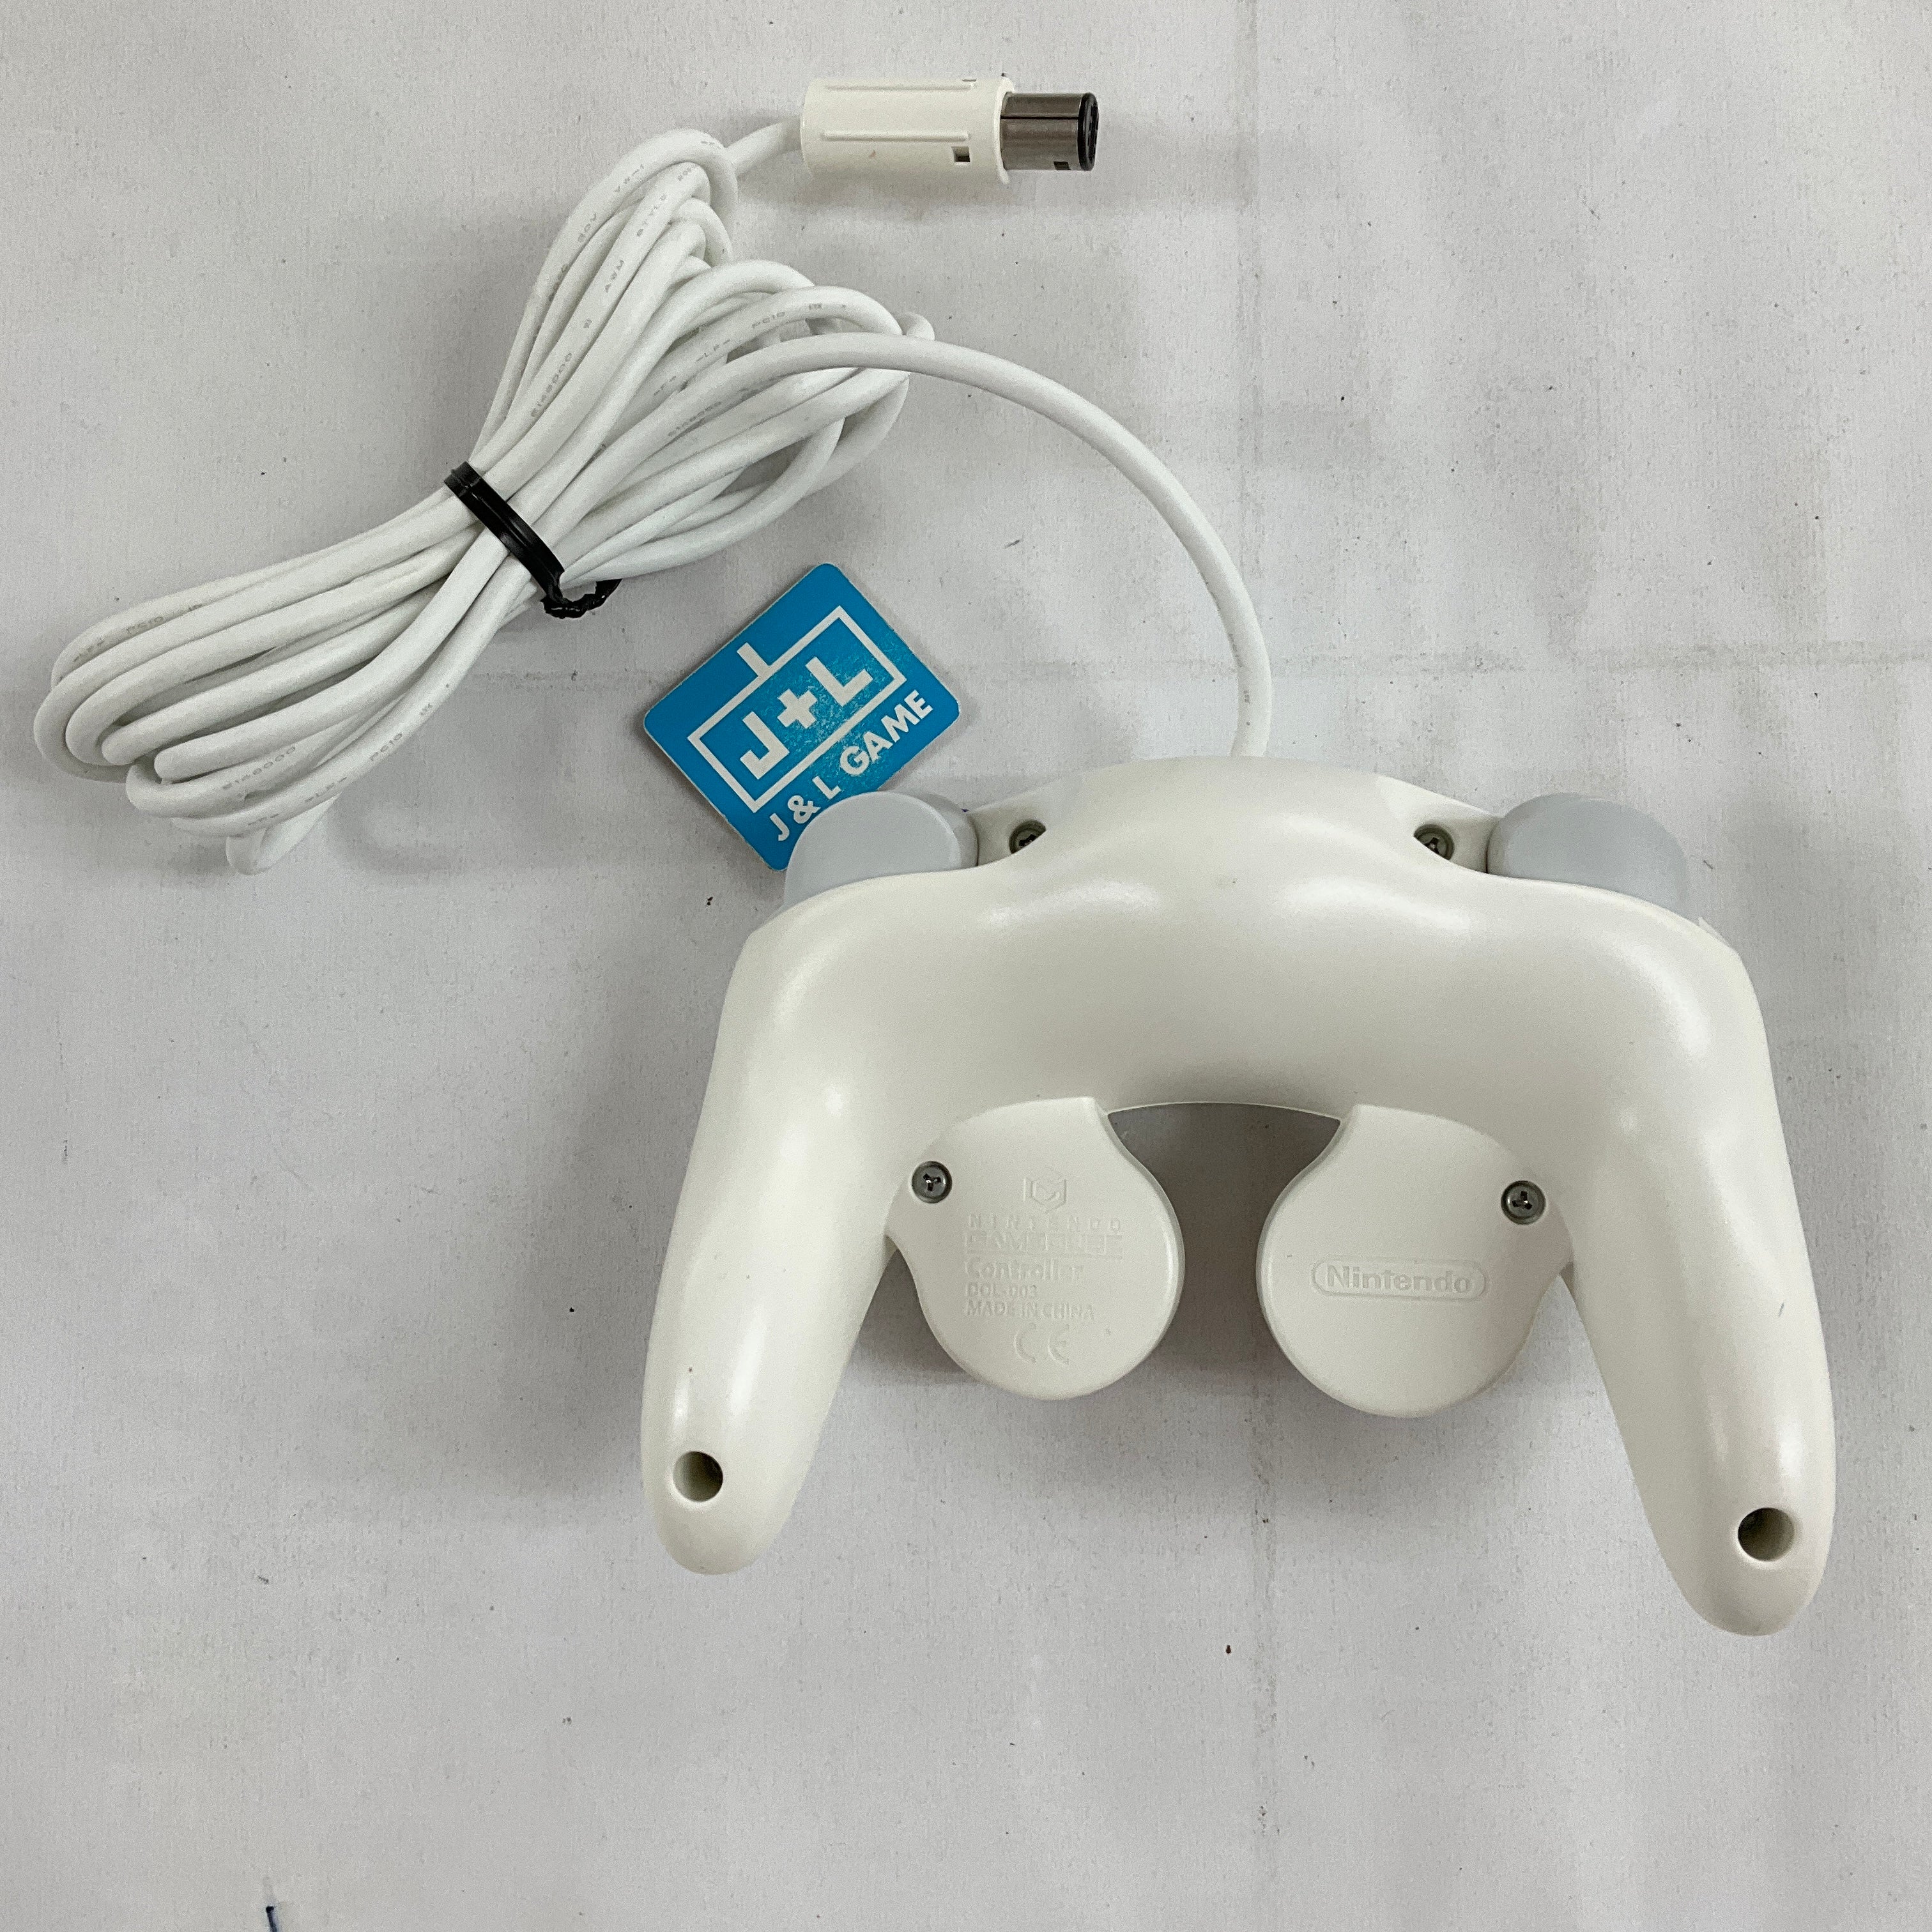 Nintendo GameCube Controller (White) - (GC) GameCube [Pre-Owned] Accessories Nintendo   